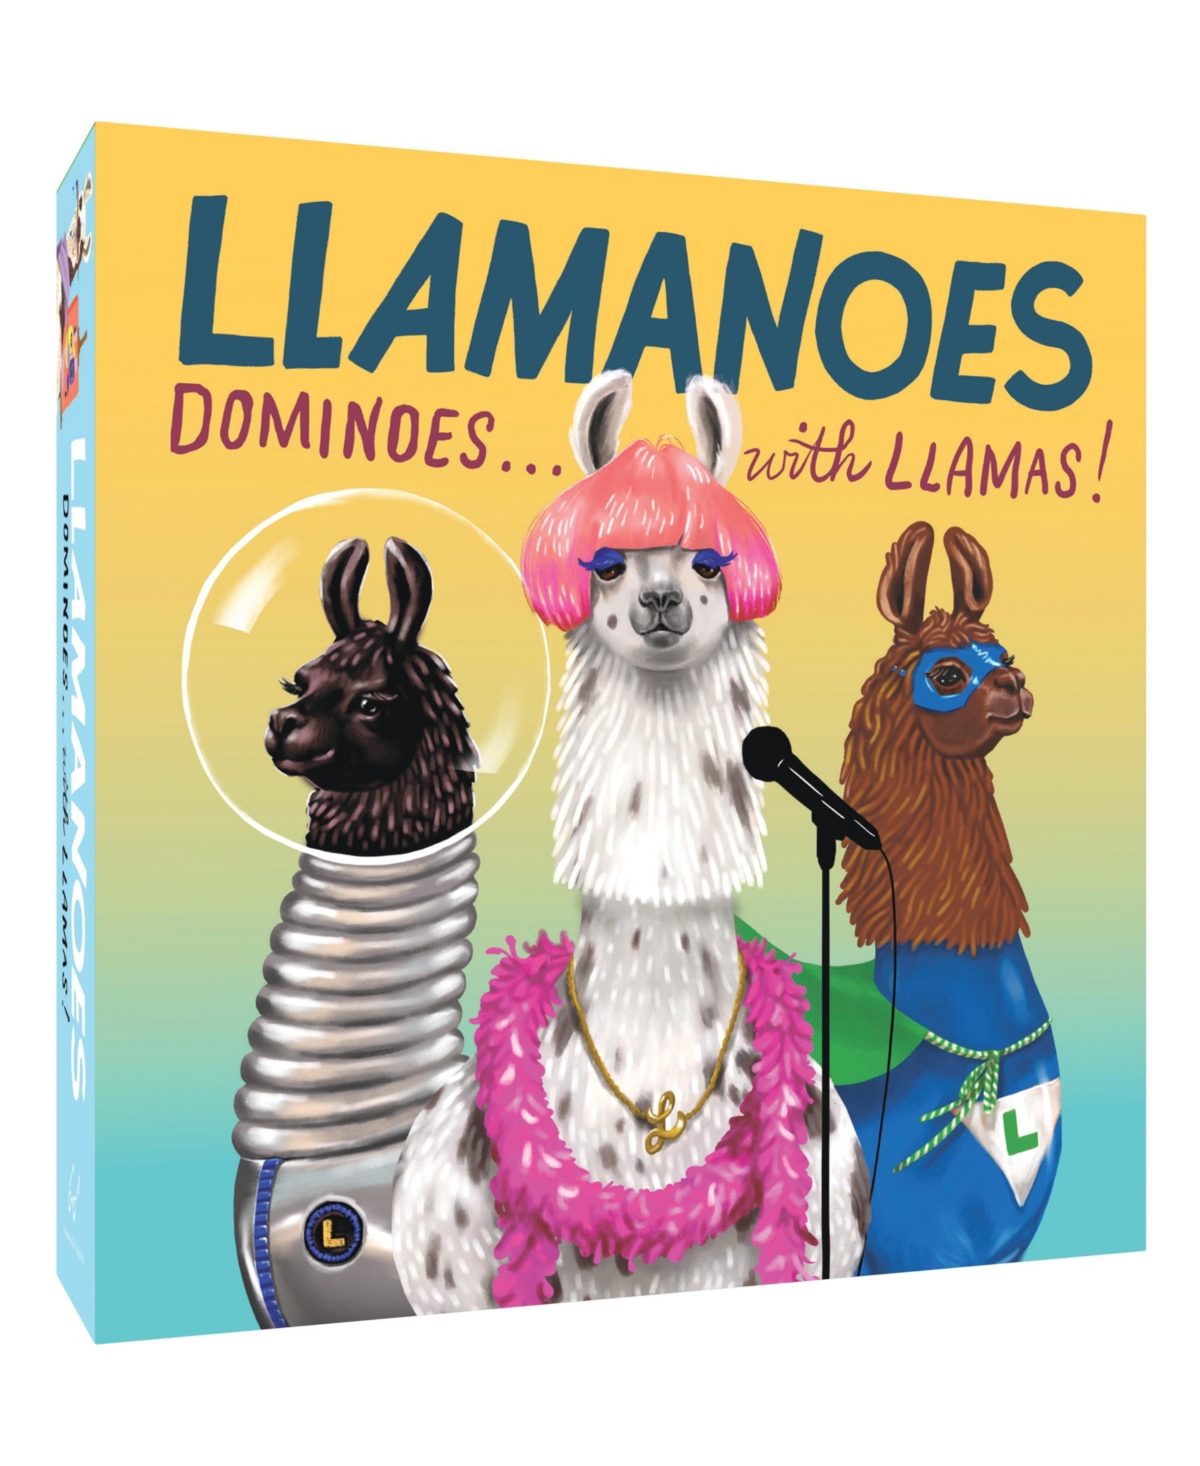 ISBN 9781452163710 product image for Chronicle Books Llamanoes - Dominoes. with Llamas! | upcitemdb.com